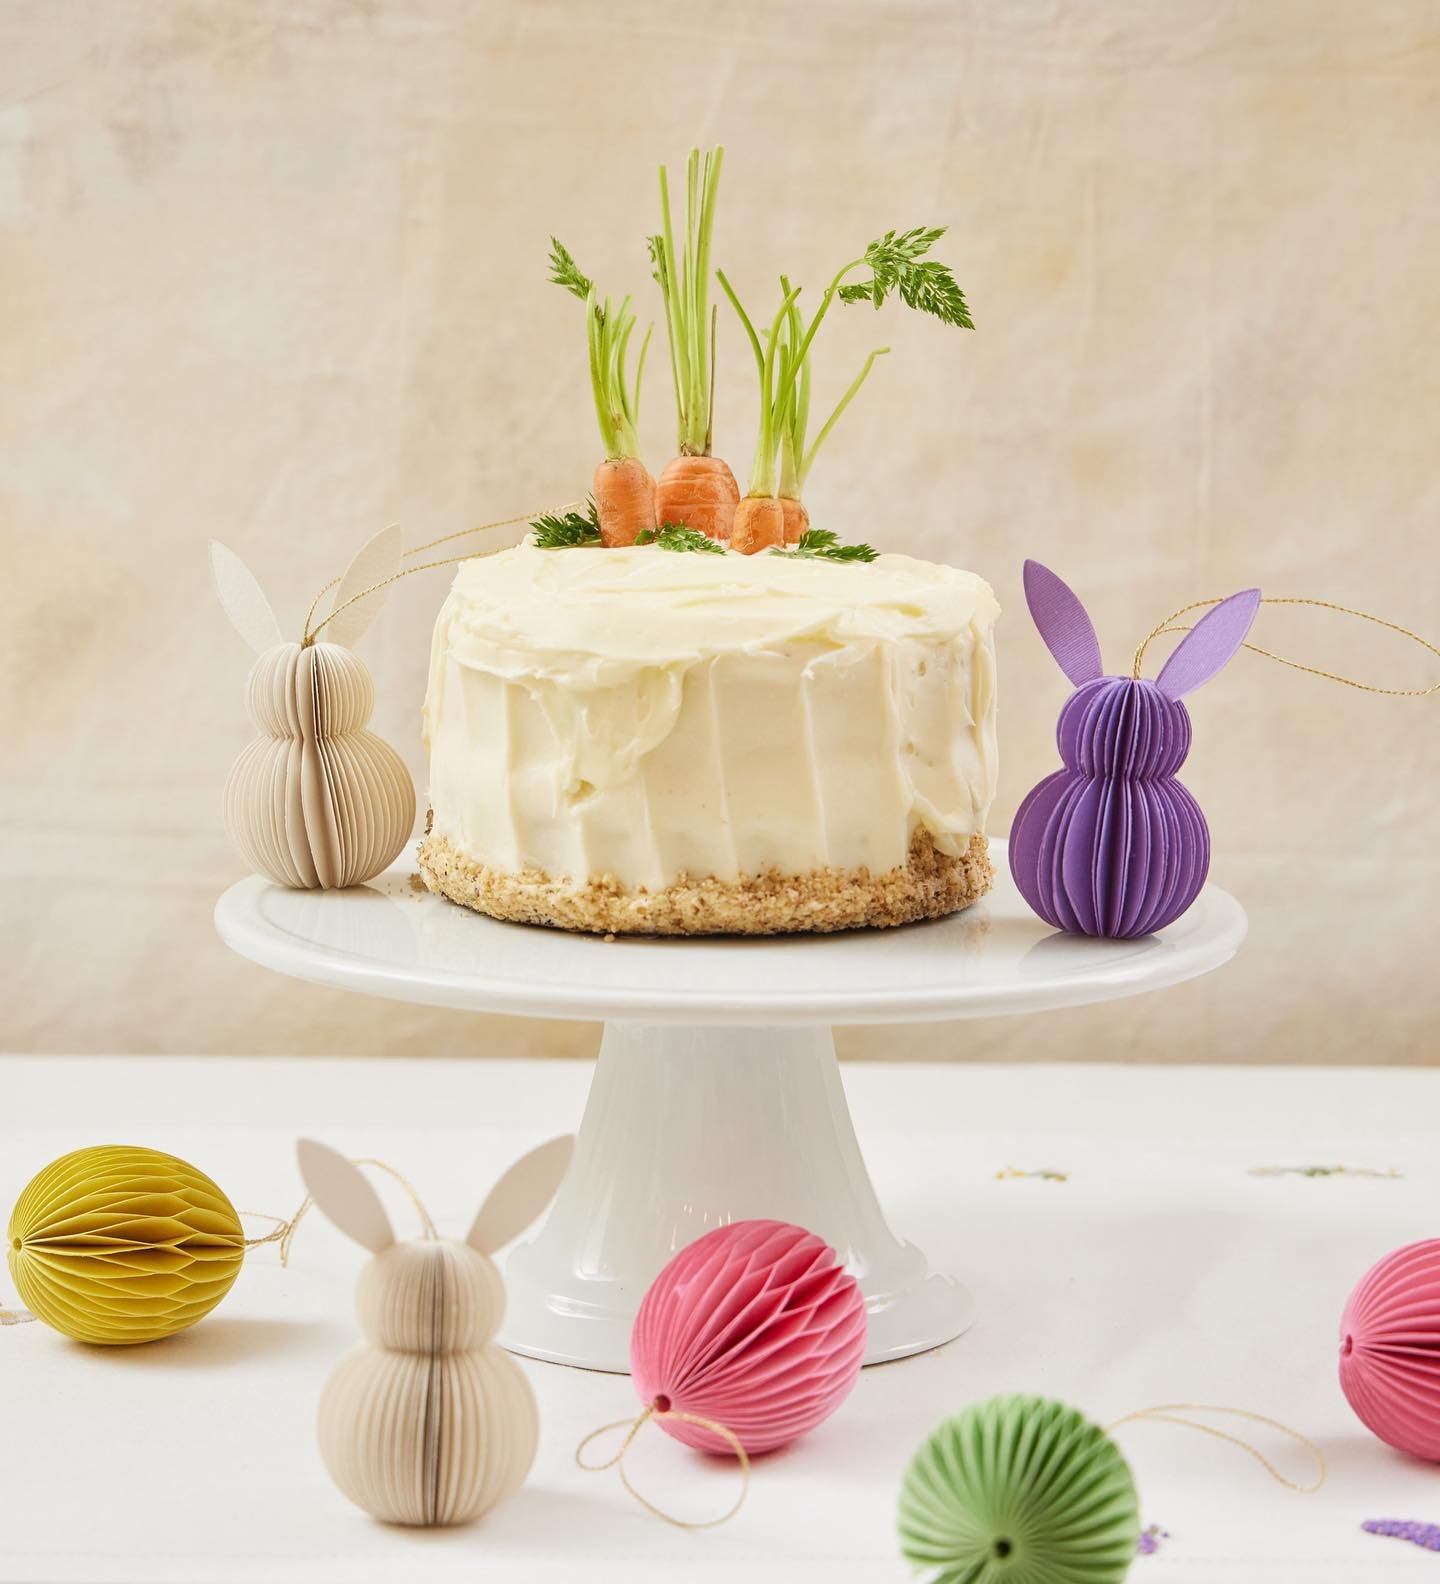 🐰Hoppy Easter!🥕 @craftspring #eastercake #easterdecor  #carrotcake